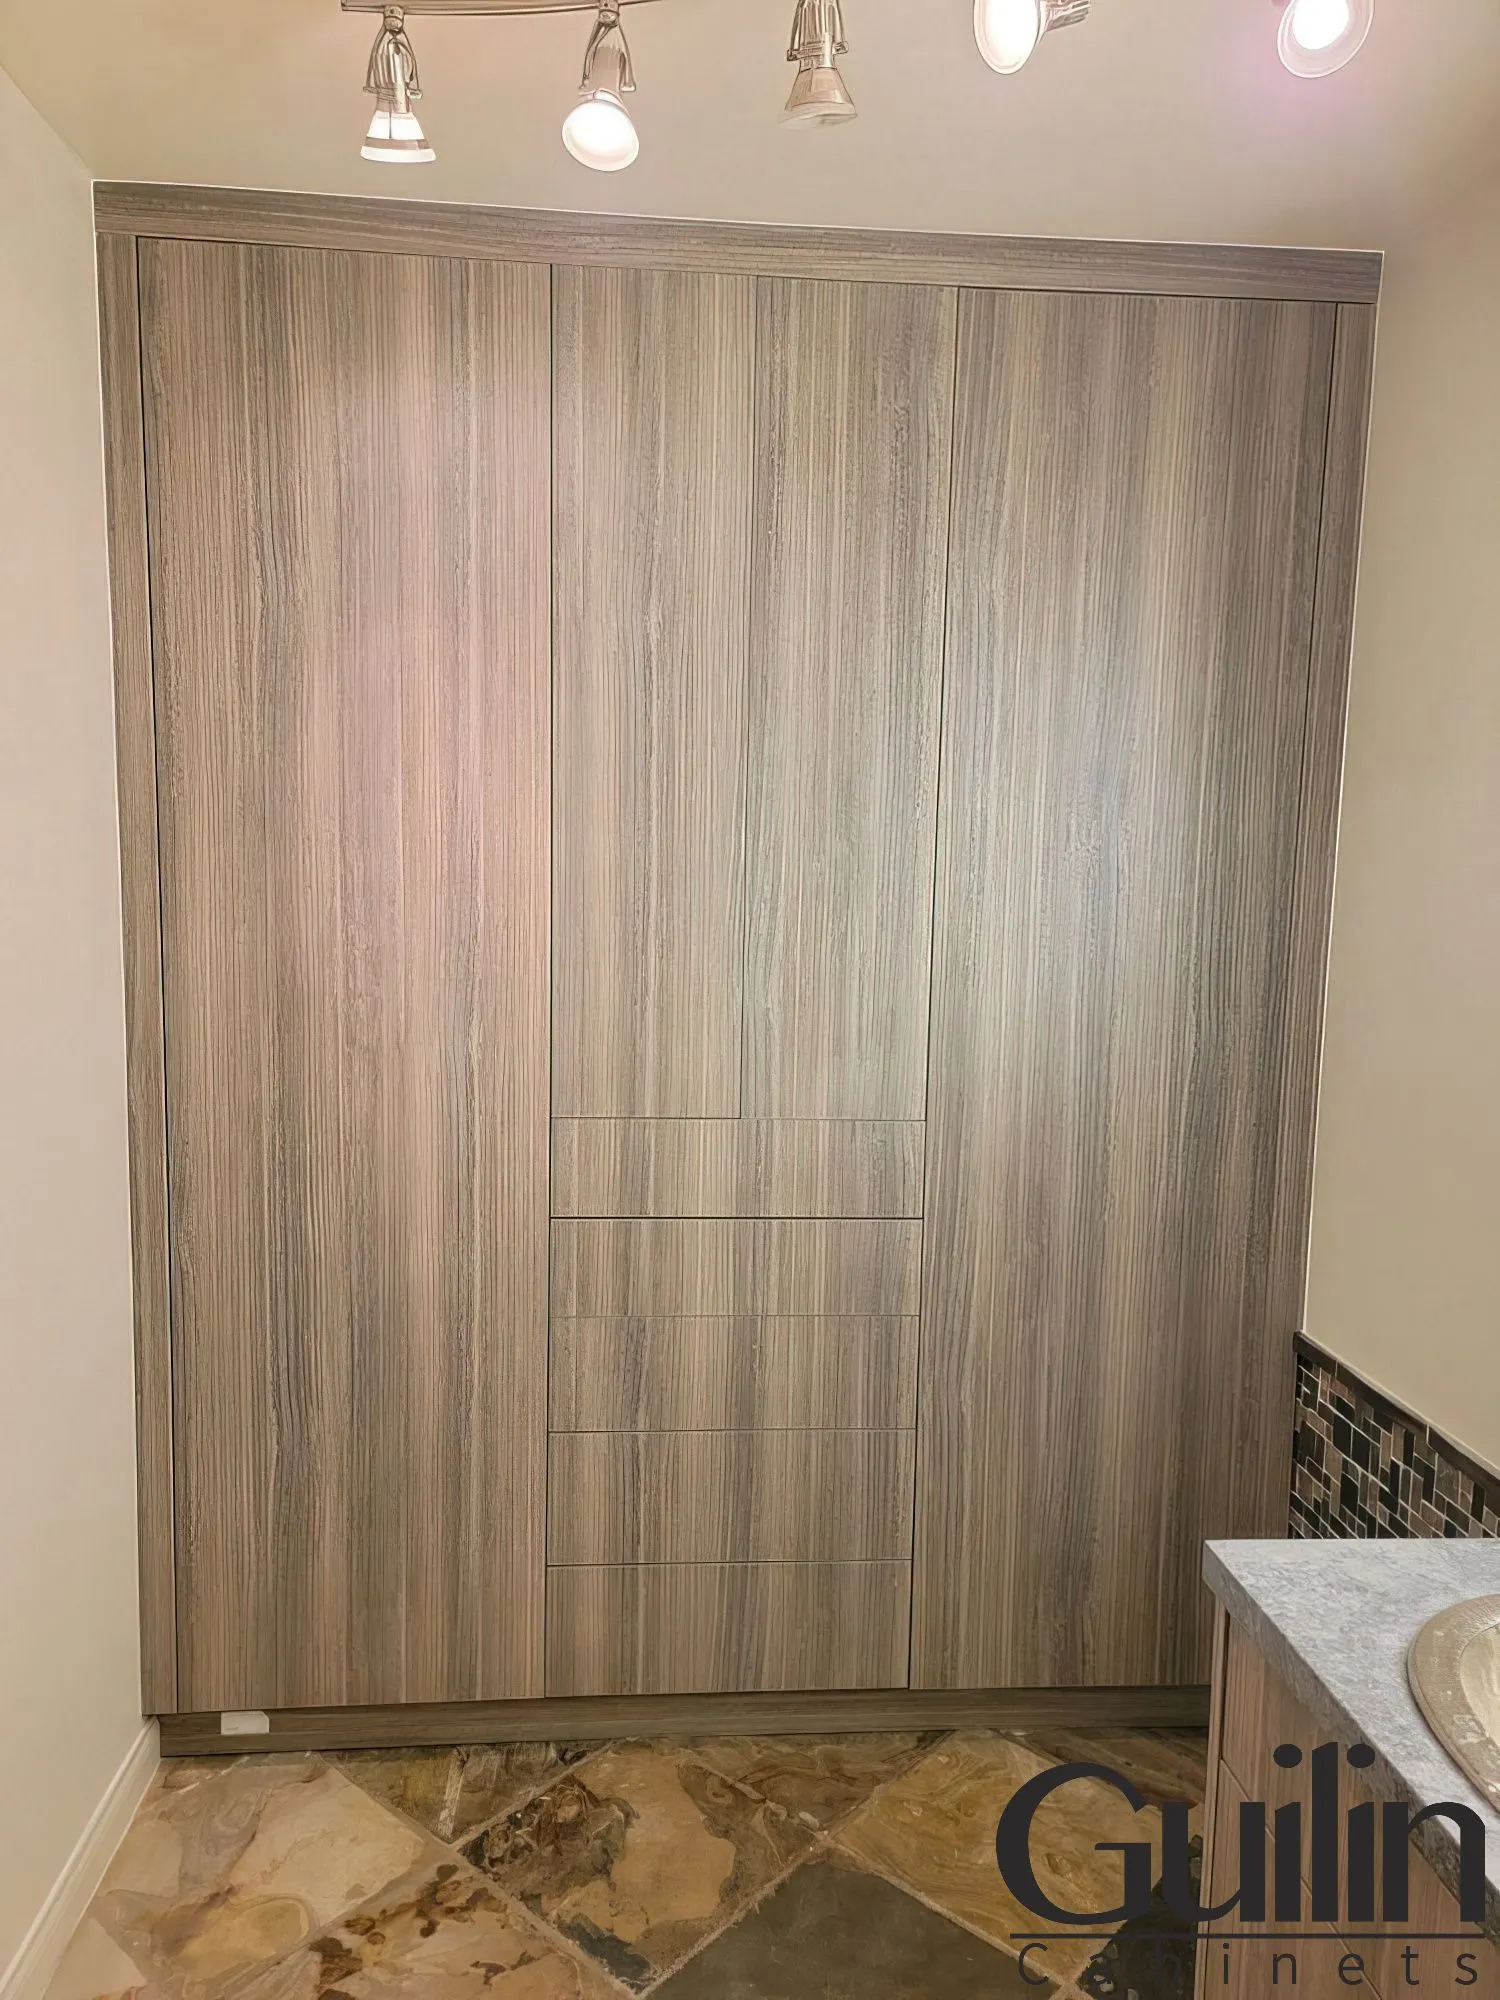 Custom Refacing the bathroom cabinets with wood veneers - Custom Closet, Cabinet in Bathroom with Sleek, Vanity Look Santa Ana, CA - Guilin Cabinets